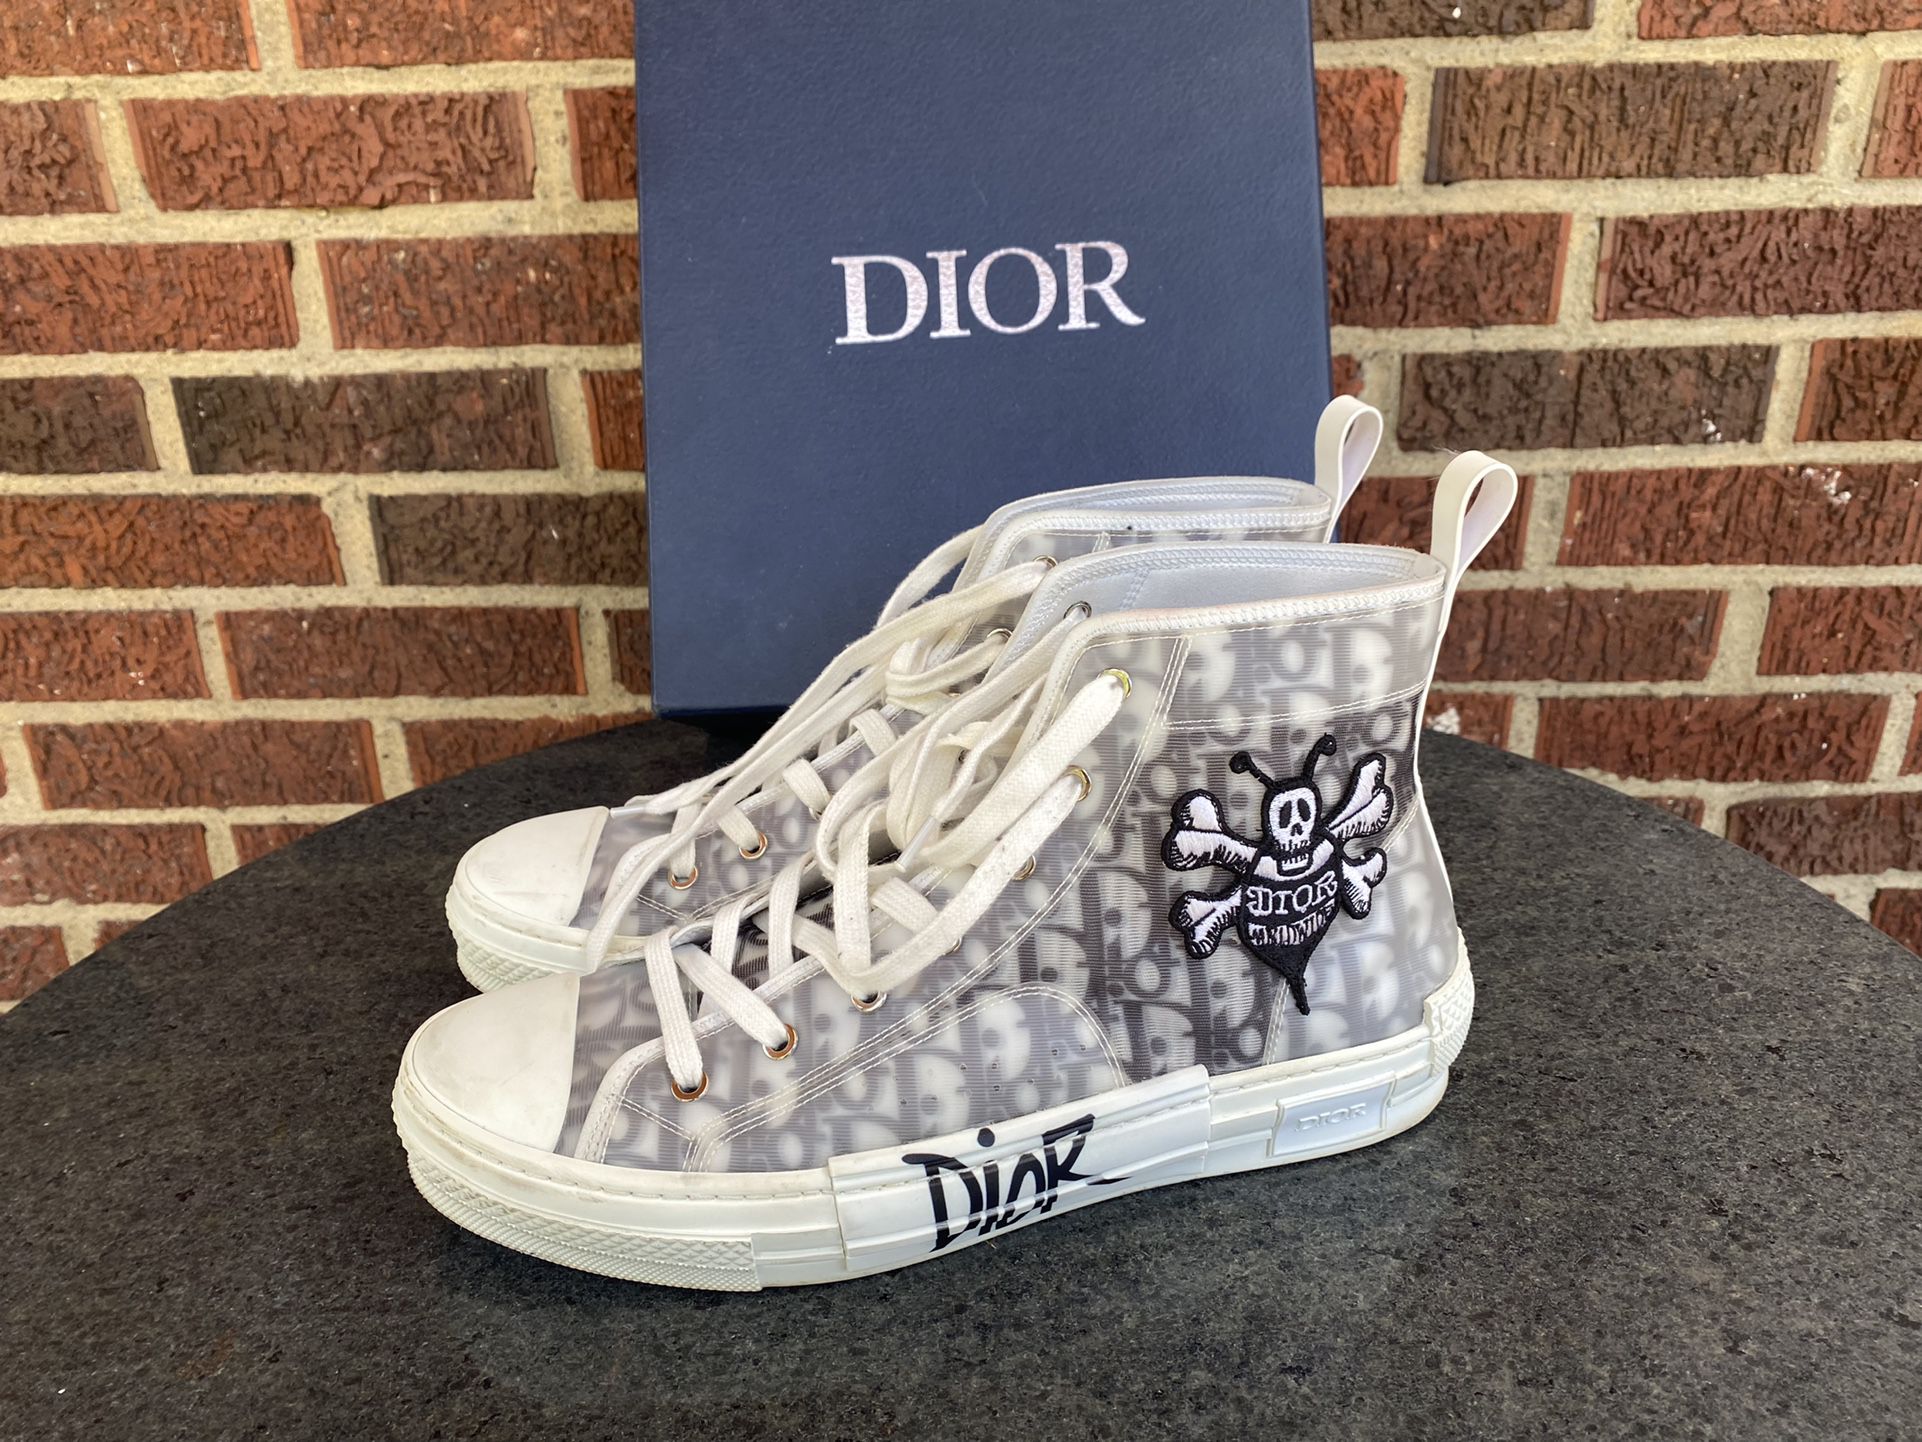 Dior Converse Shoes